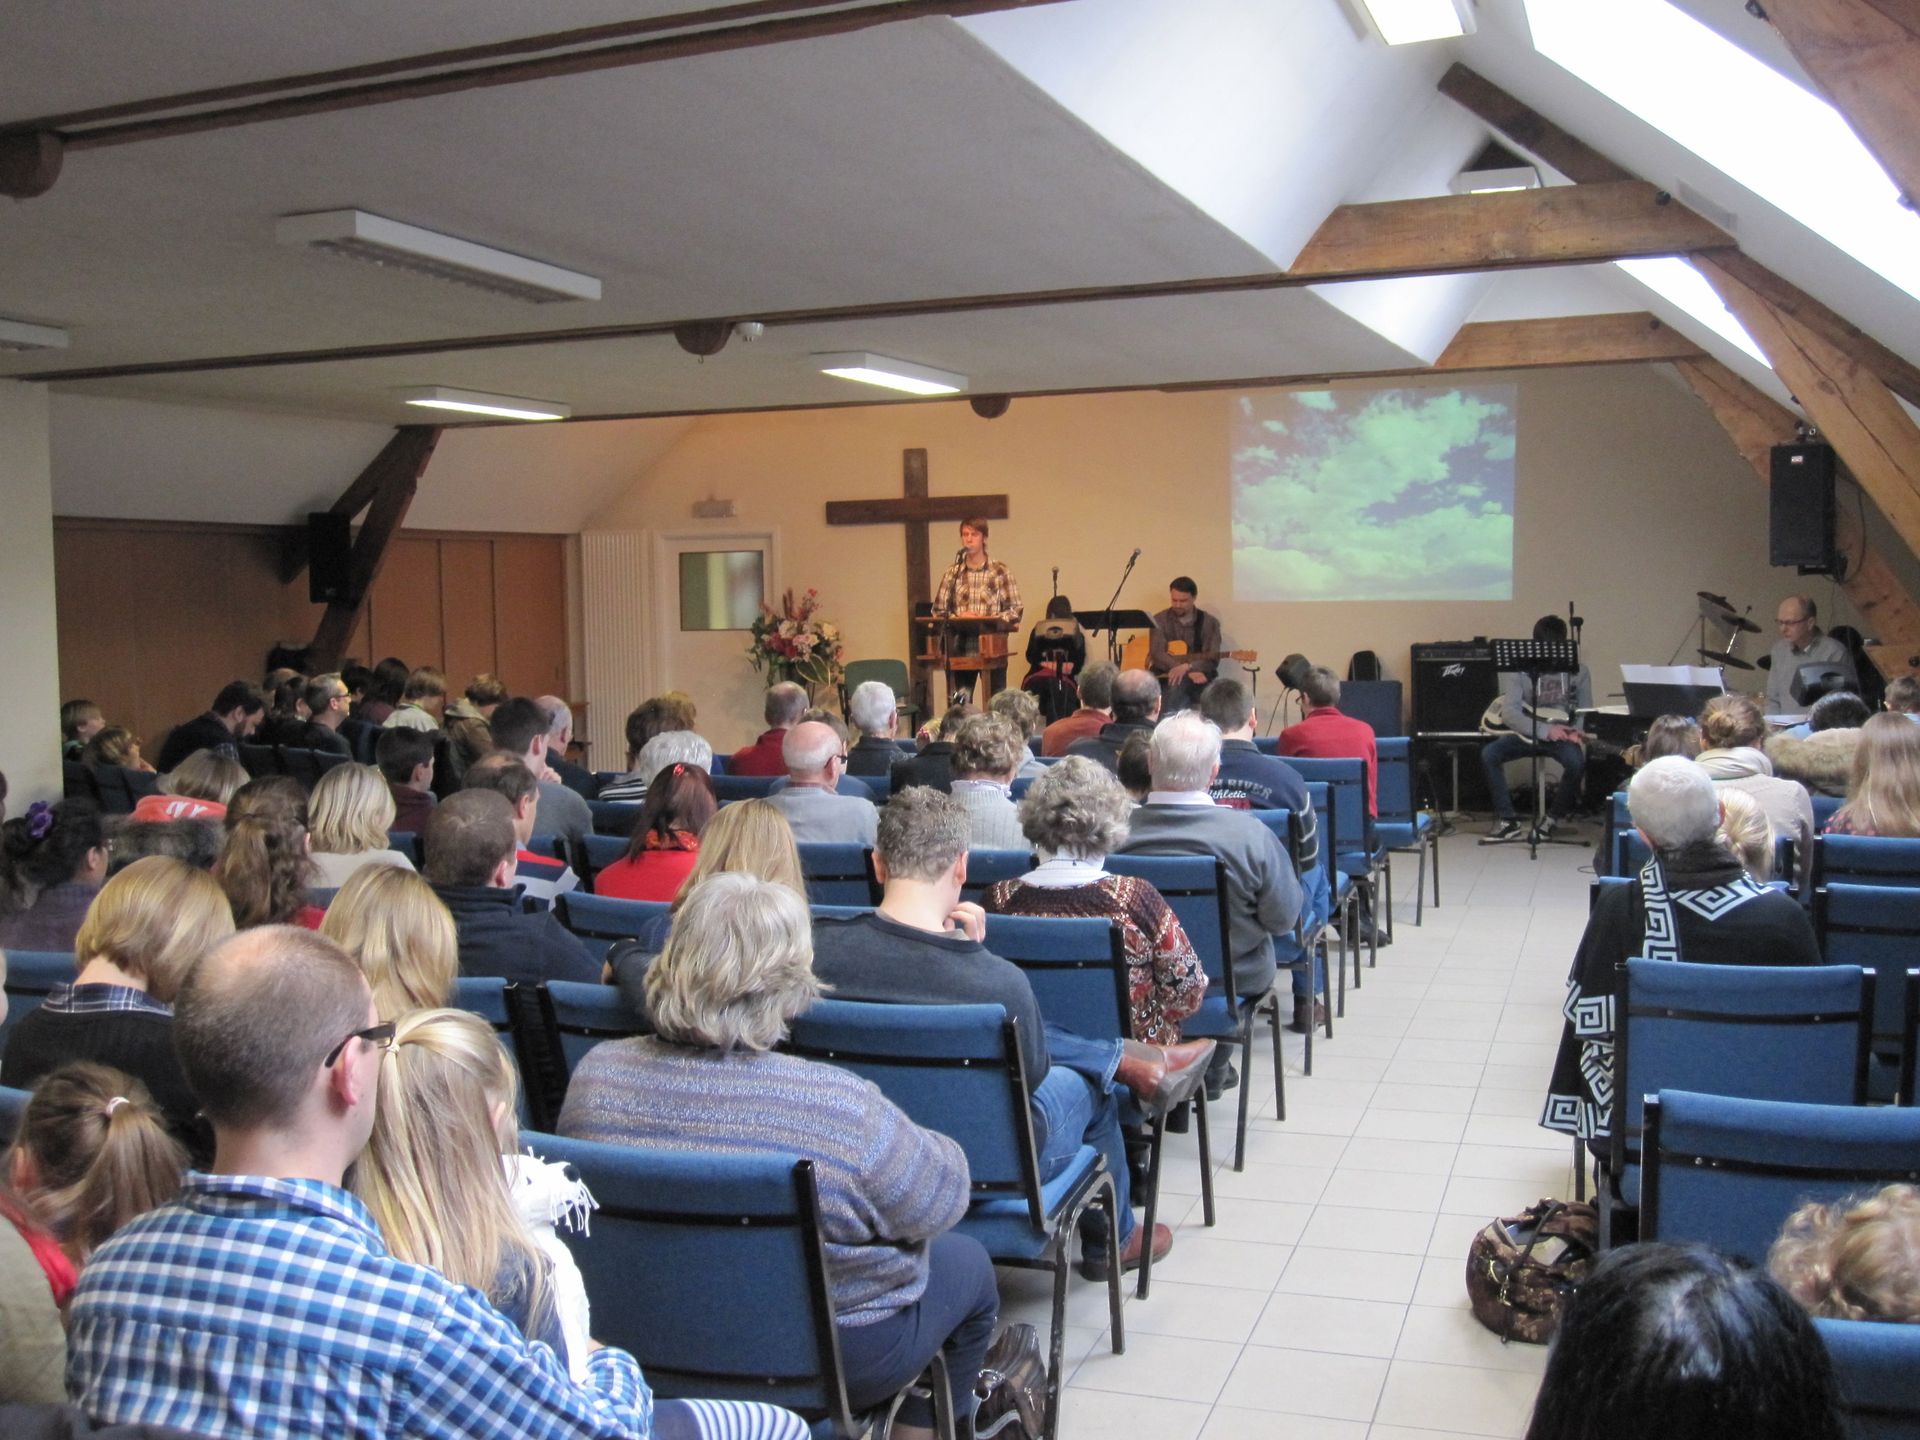 Sunday morning service in a Belgian church